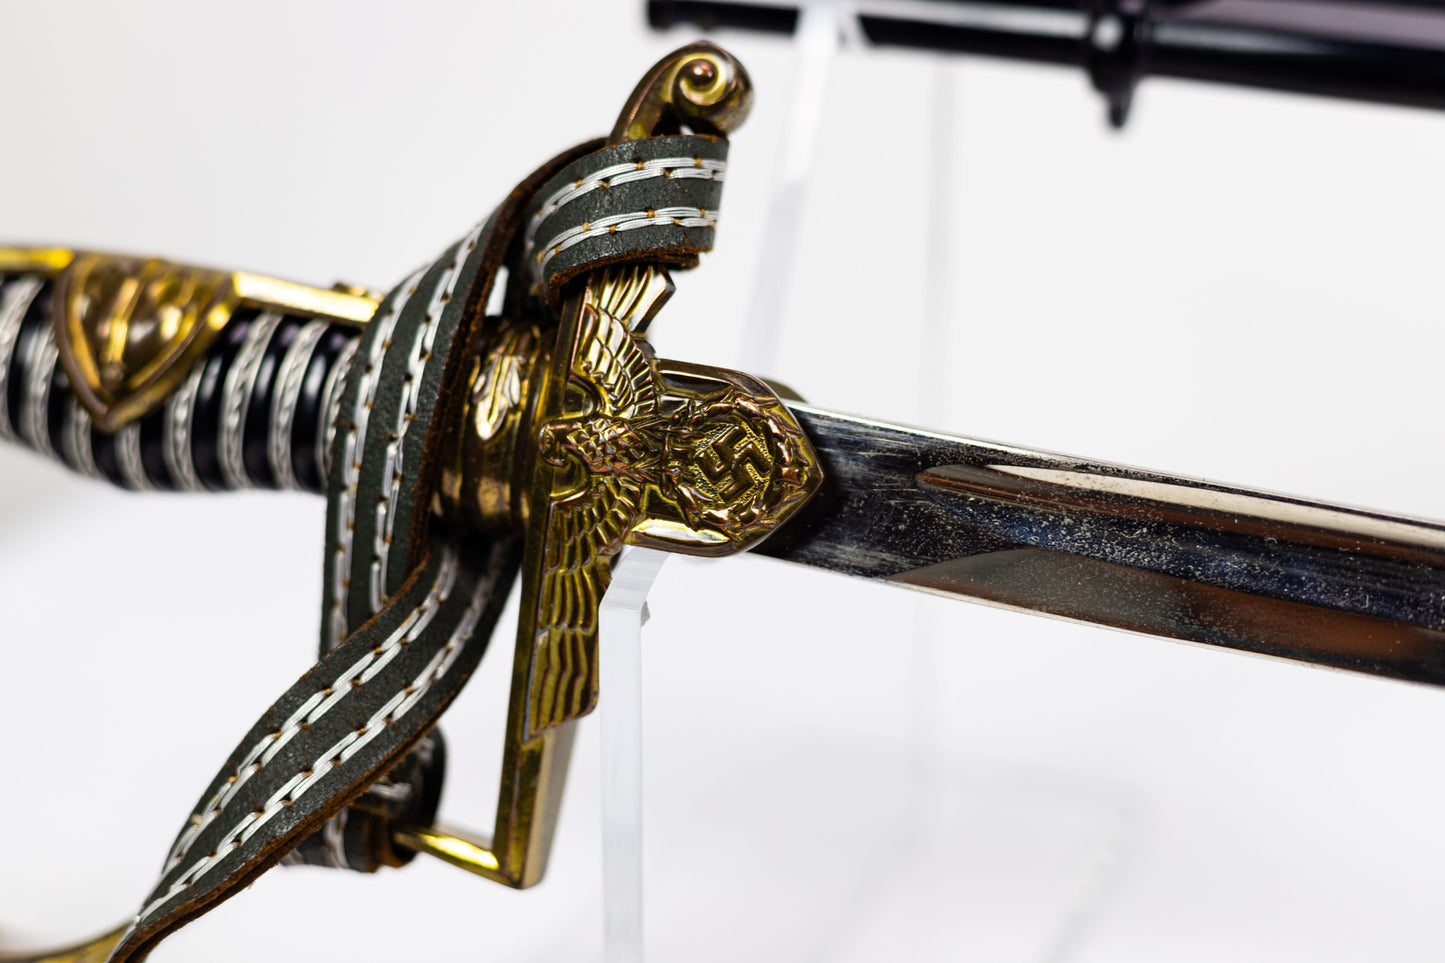 German WW2 Prinz Eugen Sword maker marked Eickhorn with sheath and portapee